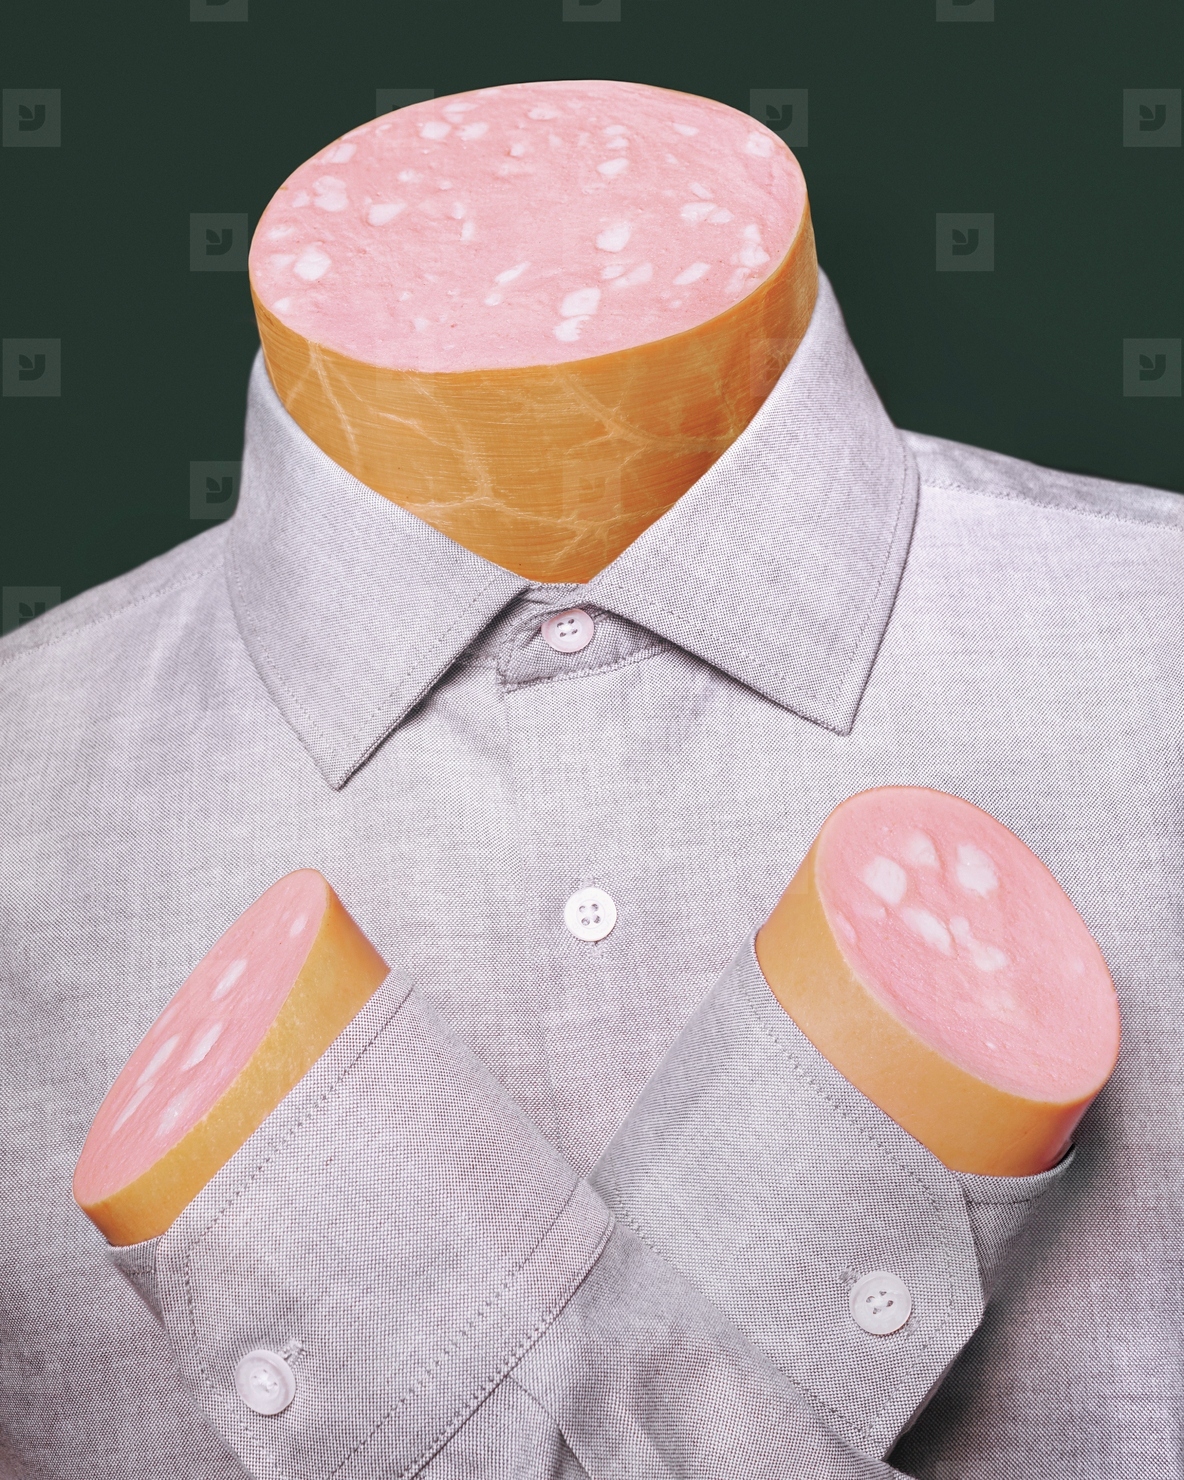 Pork wearing button down shirt